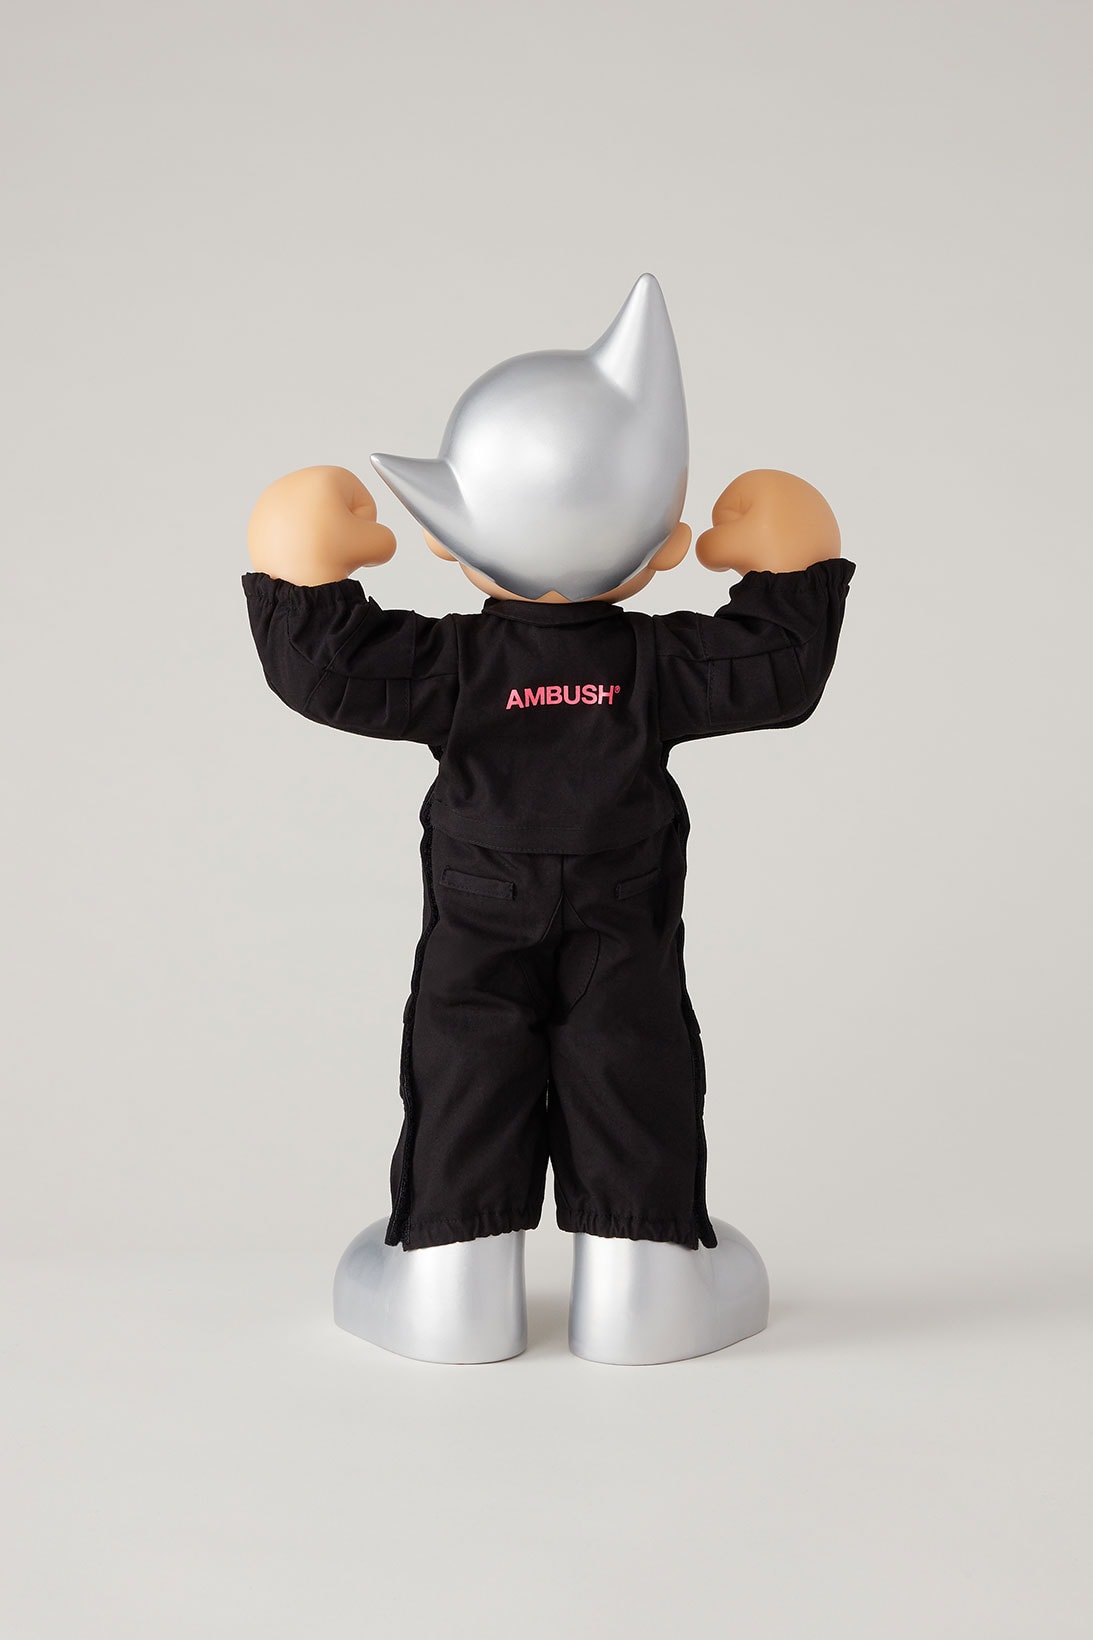 ASTRO BOY AMBUSH BAIT Figure Collectible Character Black White Jumpsuits 